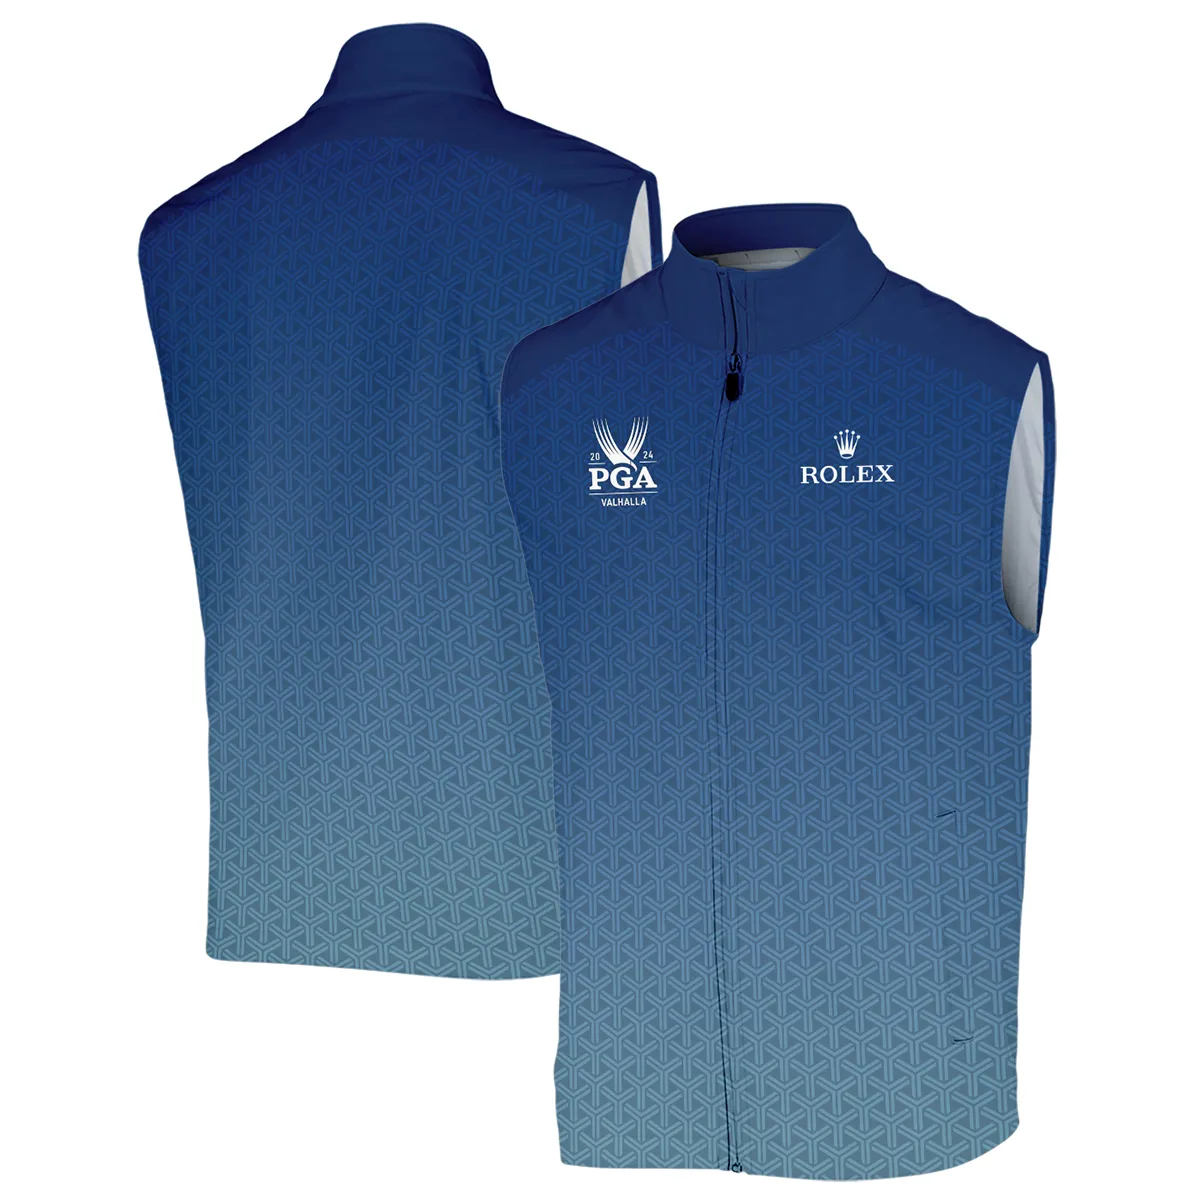 Golf Sport Pattern Blue Sport Uniform 2024 PGA Championship Valhalla Rolex Vneck Polo Shirt Style Classic